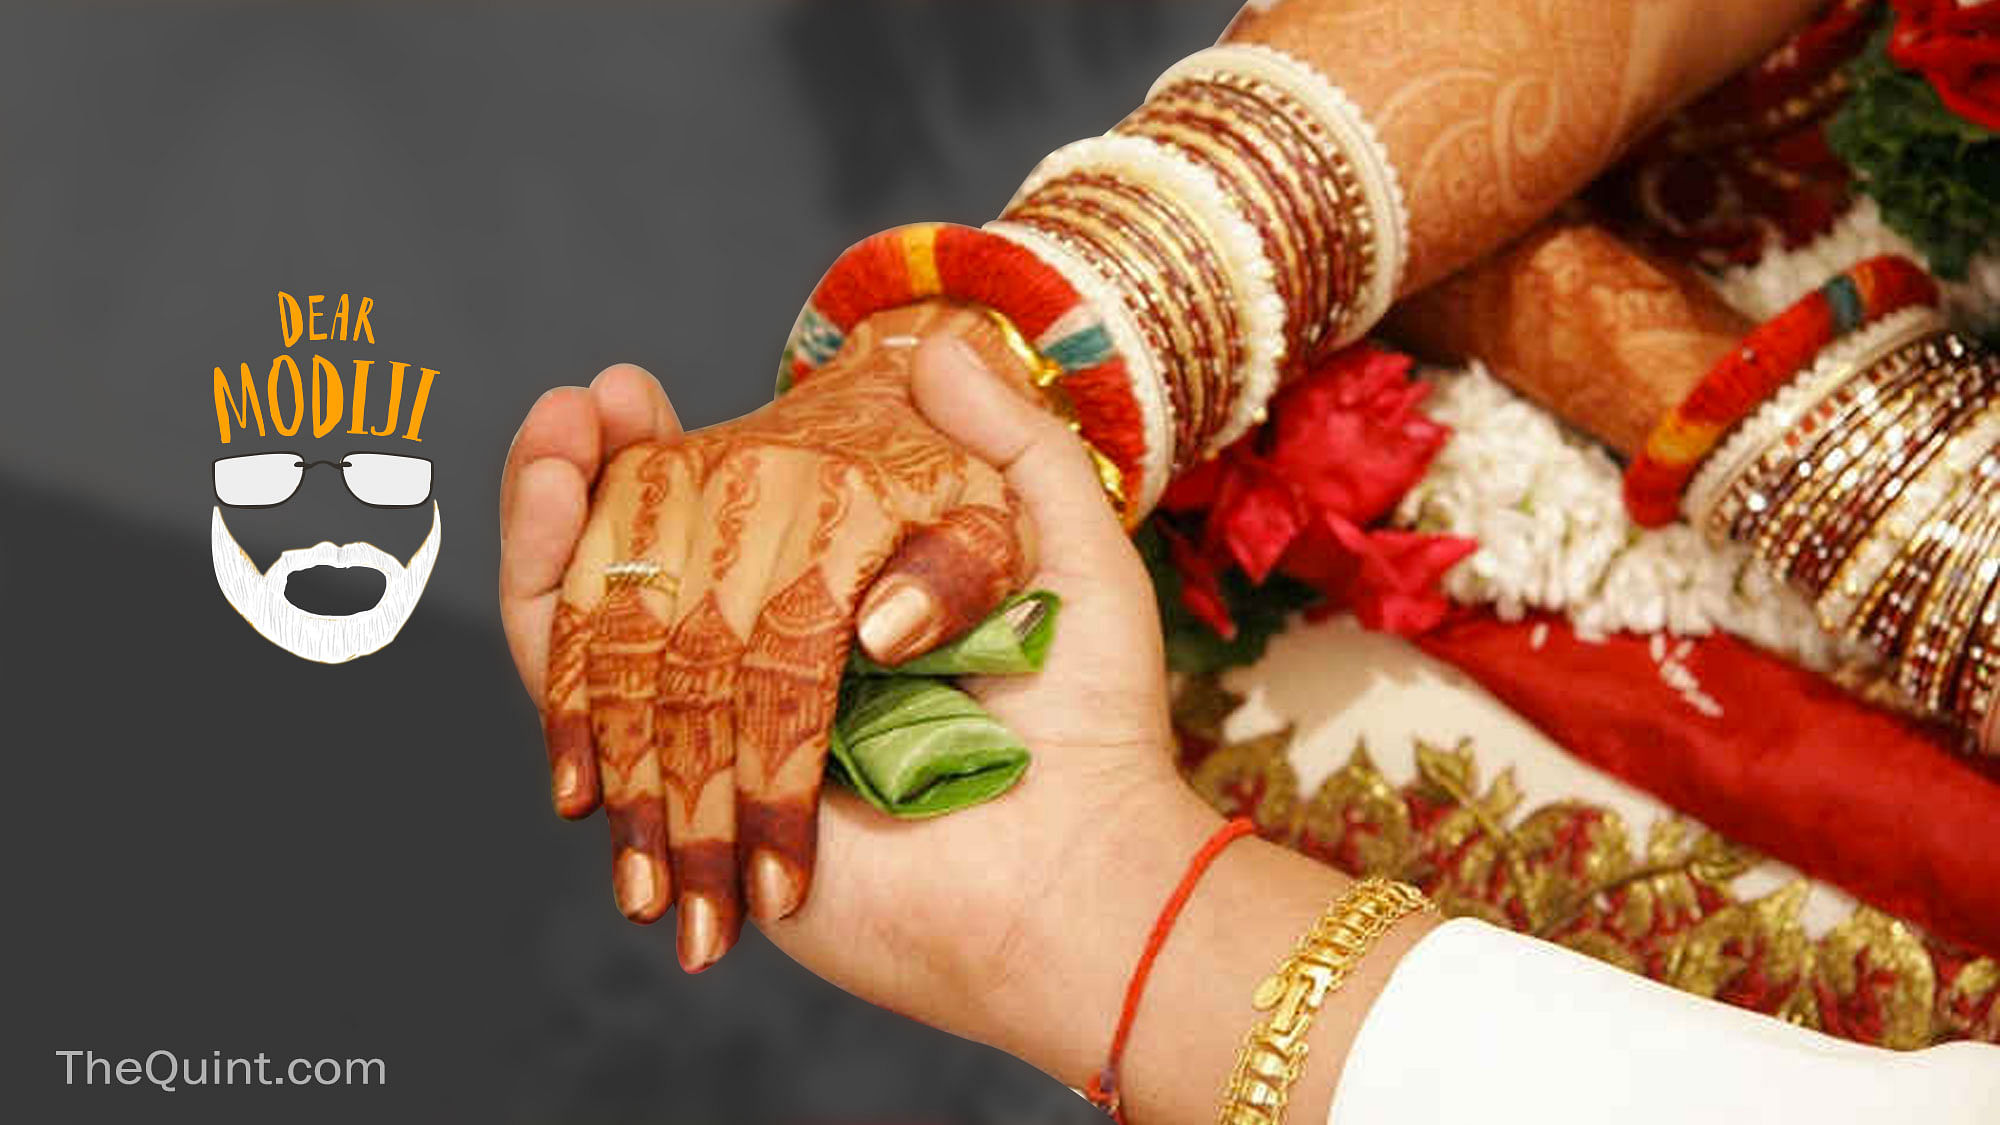 How are your ministers able to afford lavish weddings, Modi ji? (Photo: Rahul Gupta/<b>The Quint</b>)